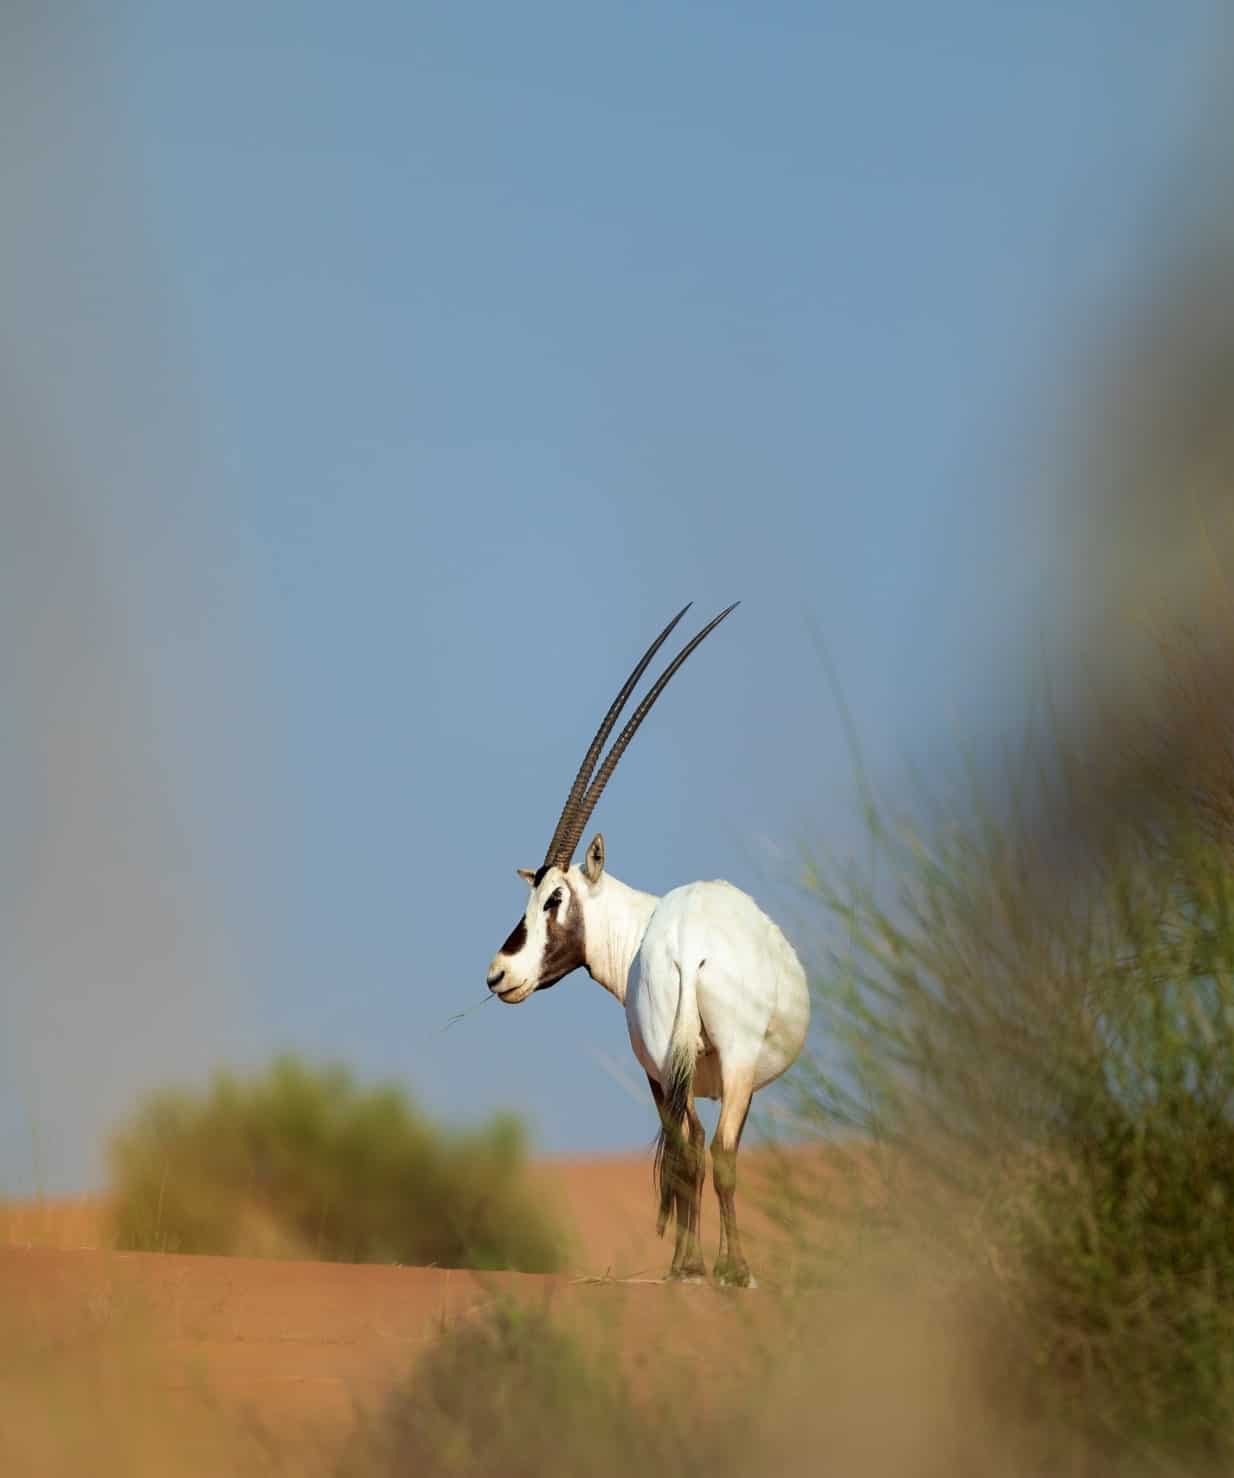 70 Arabian Oryx were donated to Al Maha by Sheikh Ahmend in 1999